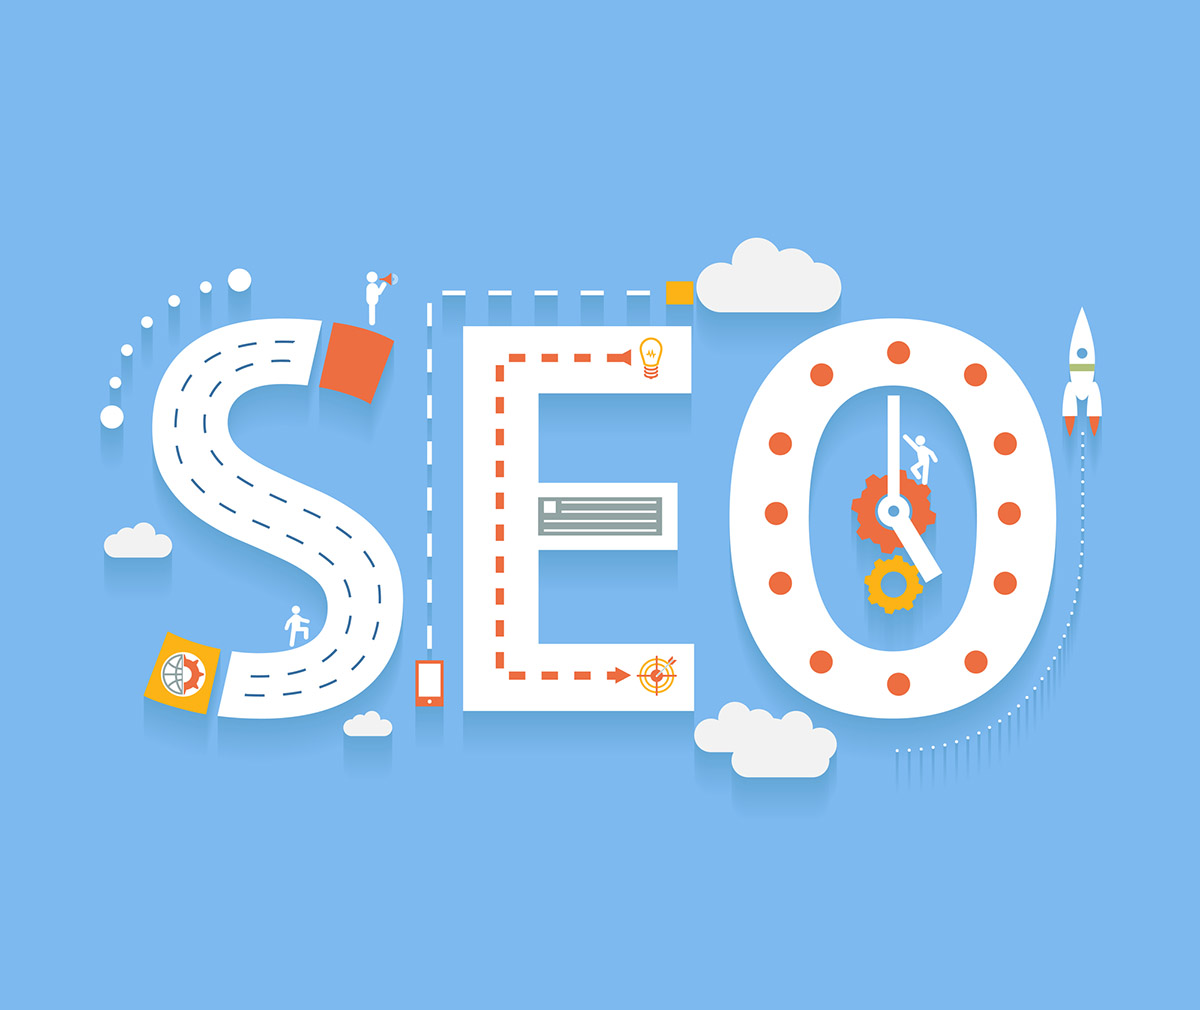 SEO (search engine optimization) concept illustration